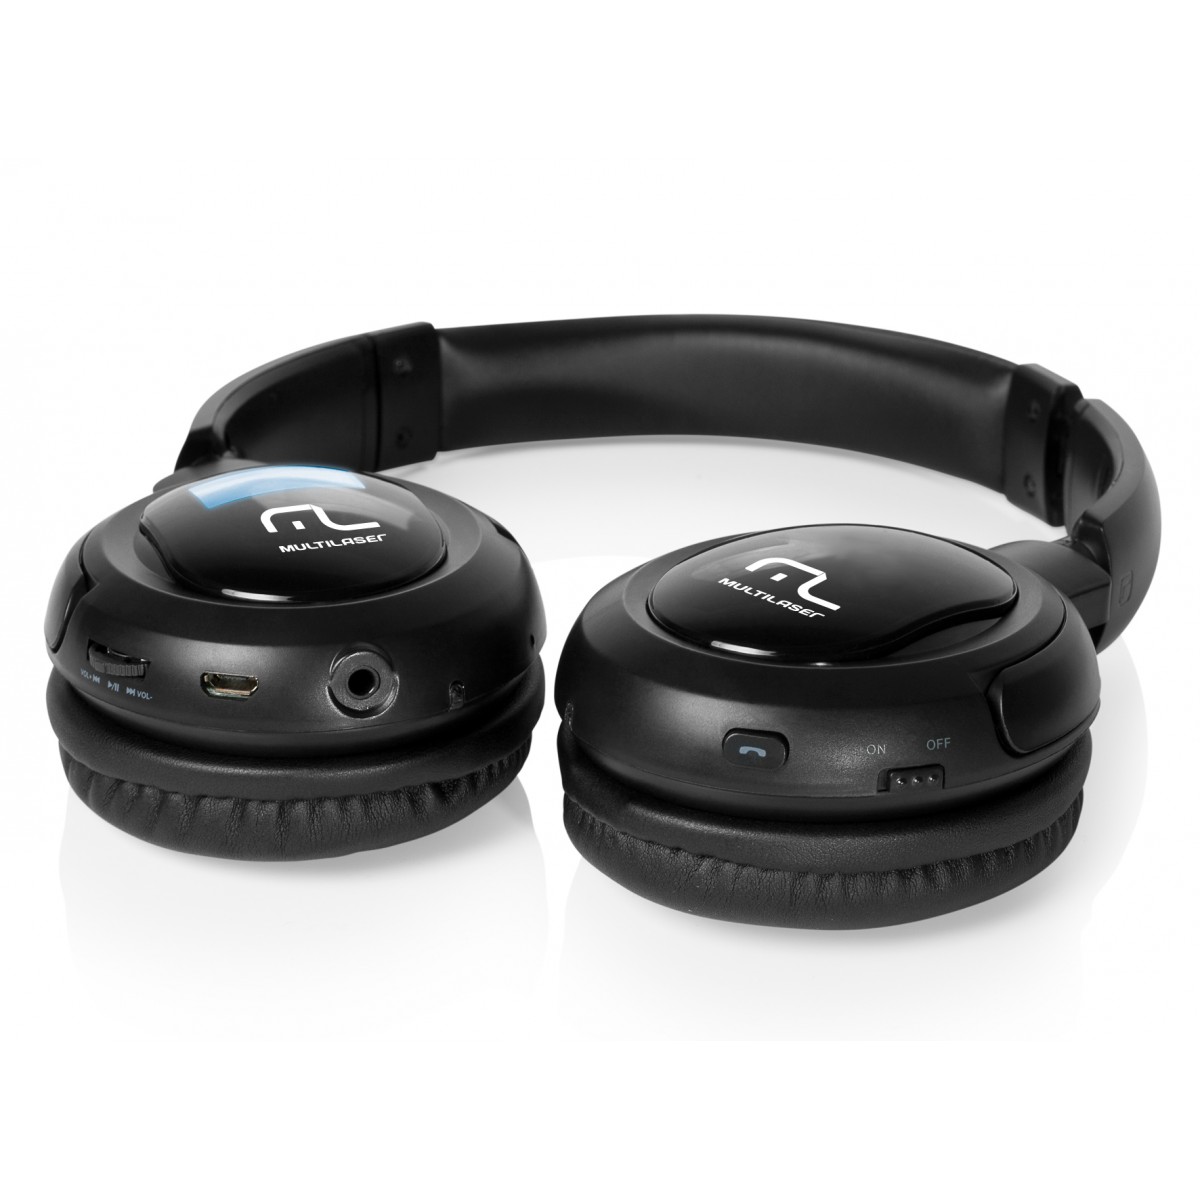 Fone de Ouvido Bluetooth MP3 PM PH095 - Multilaser